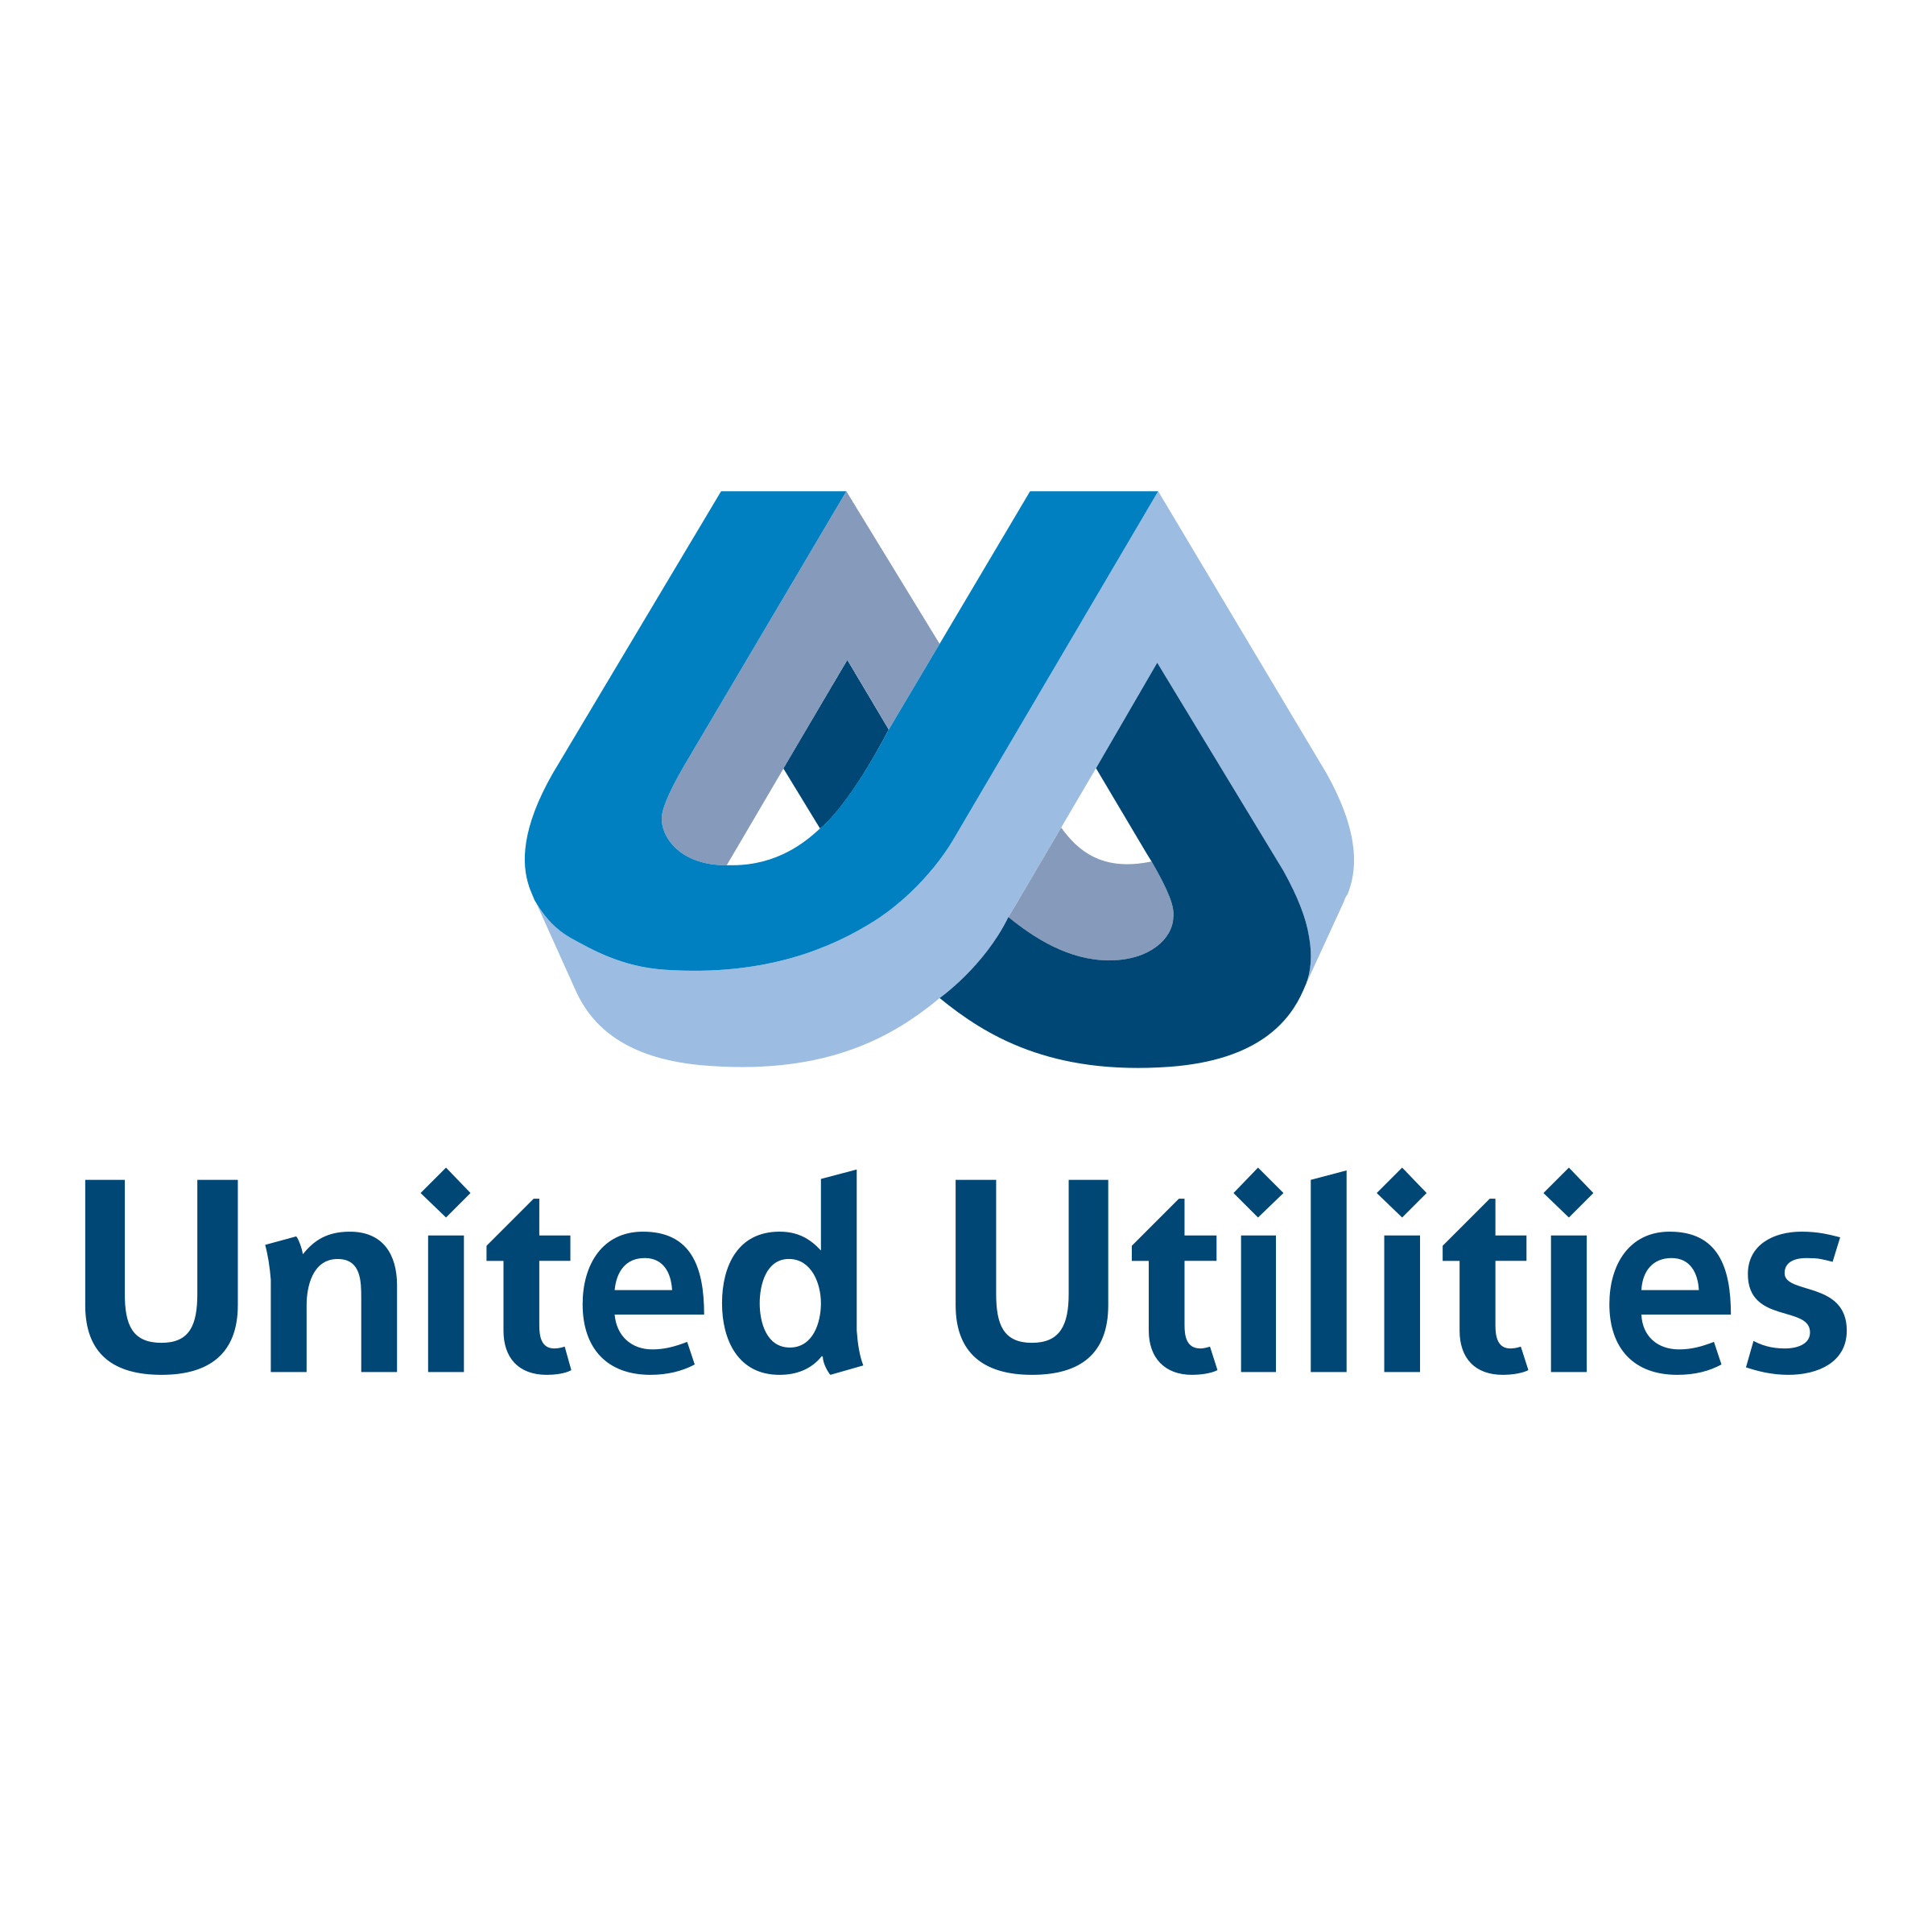 Utilities Logo - United Utilities Logo PNG Transparent & SVG Vector